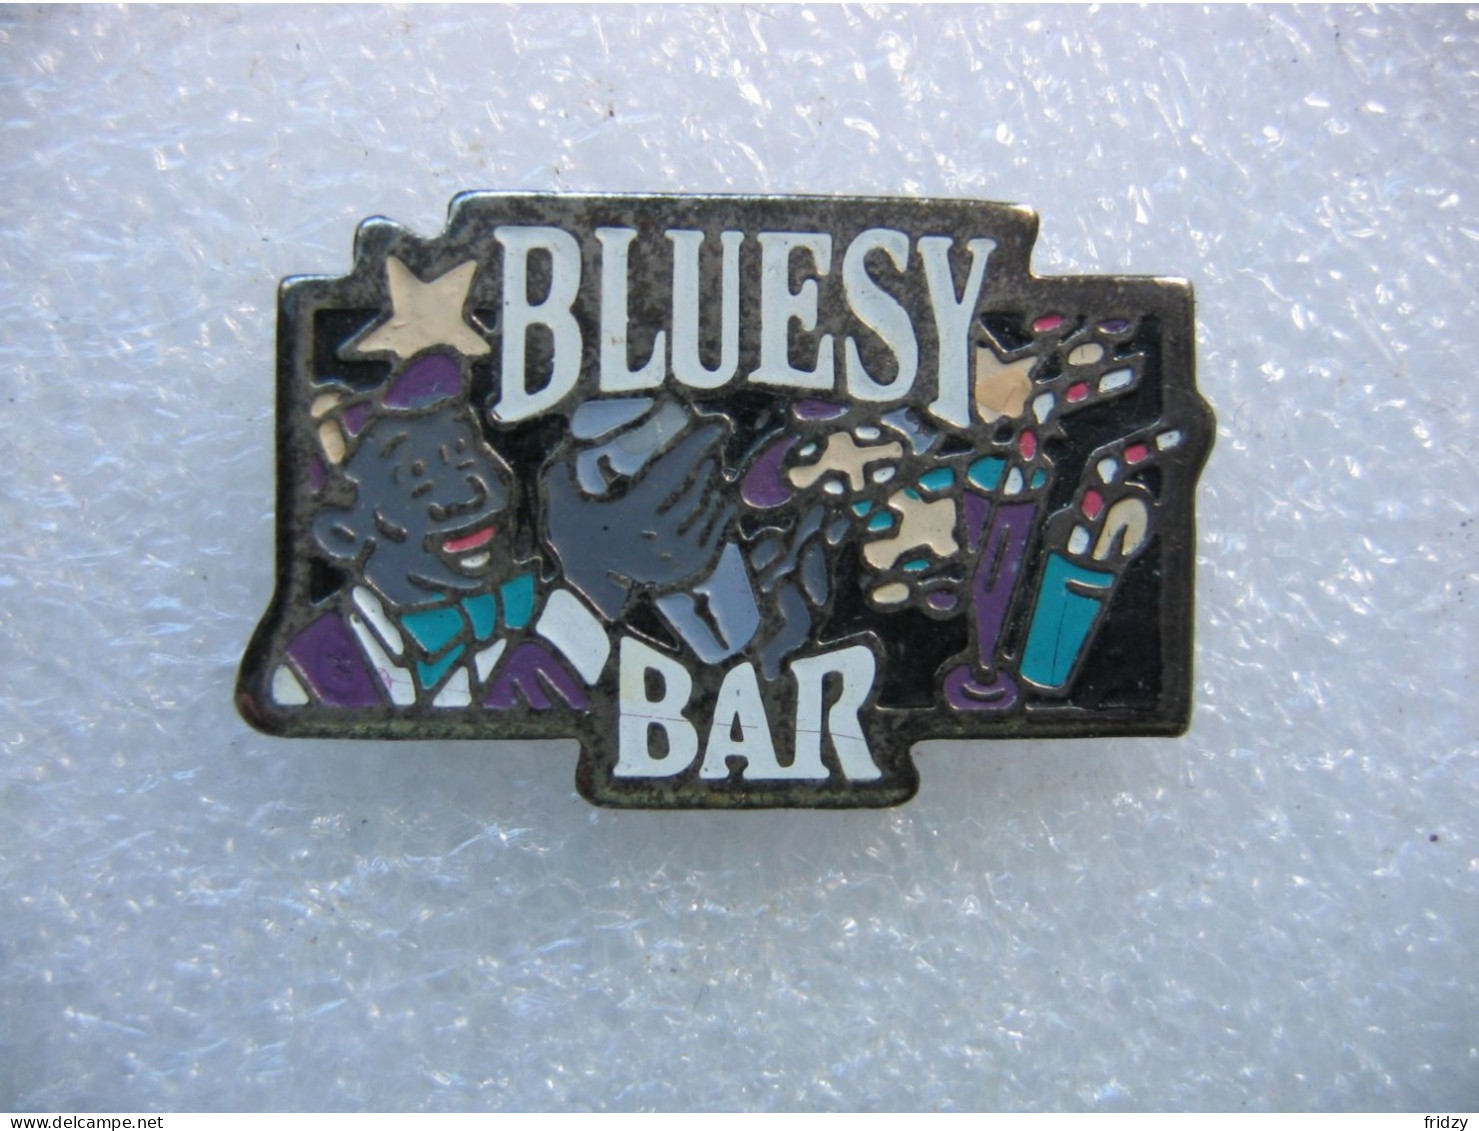 Pin's Bluesy Bar - Bevande